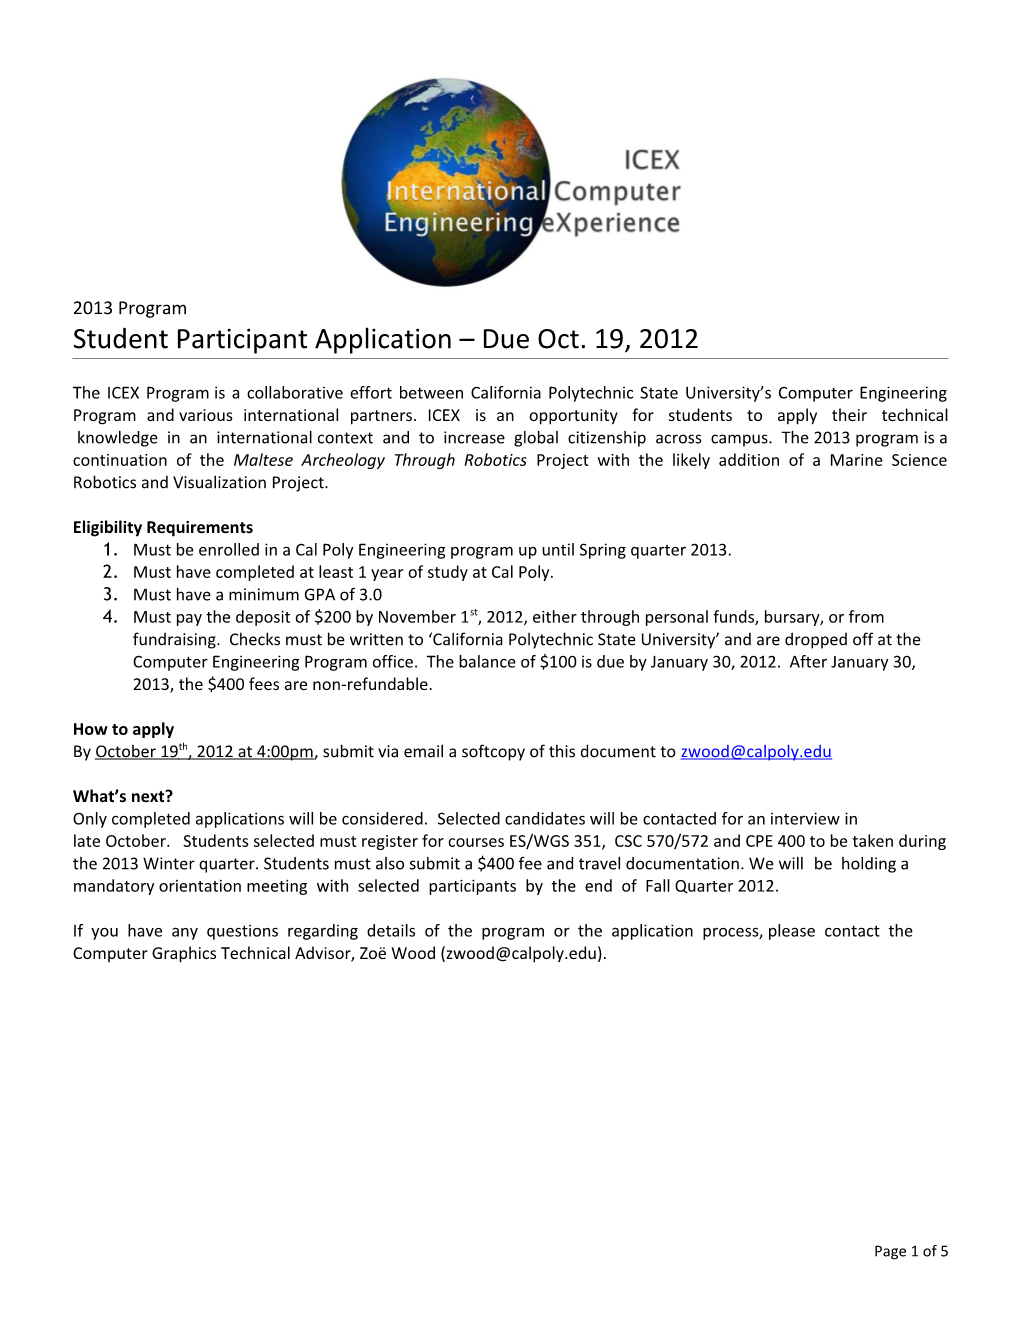 Student Participant Application Due Oct. 19, 2012